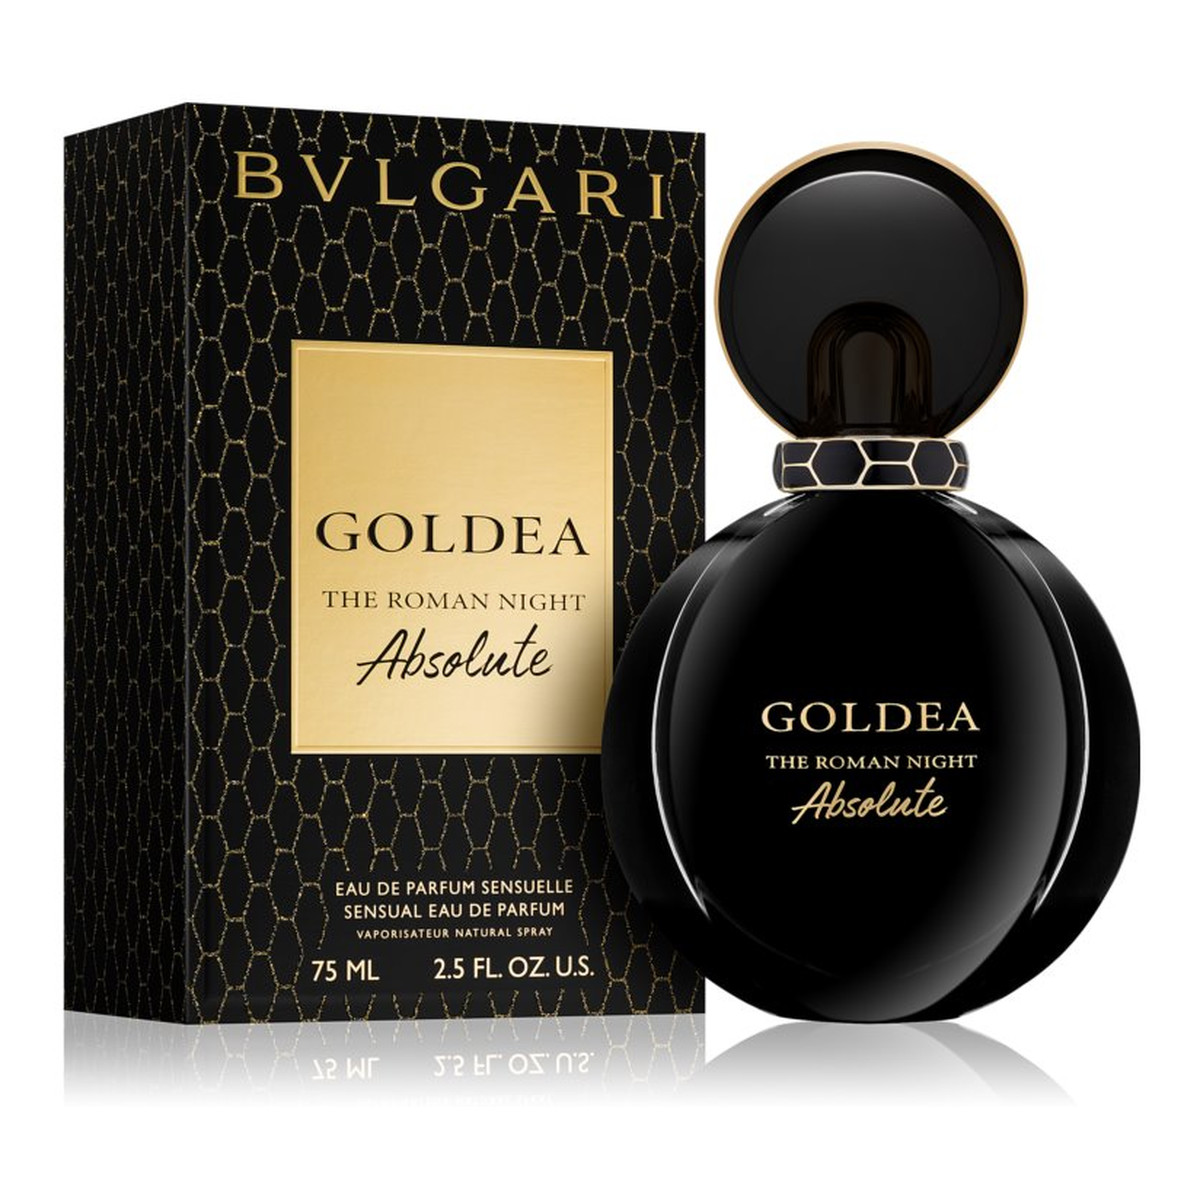 Bvlgari Goldea The Roman Night Absolute woda perfumowana 75ml